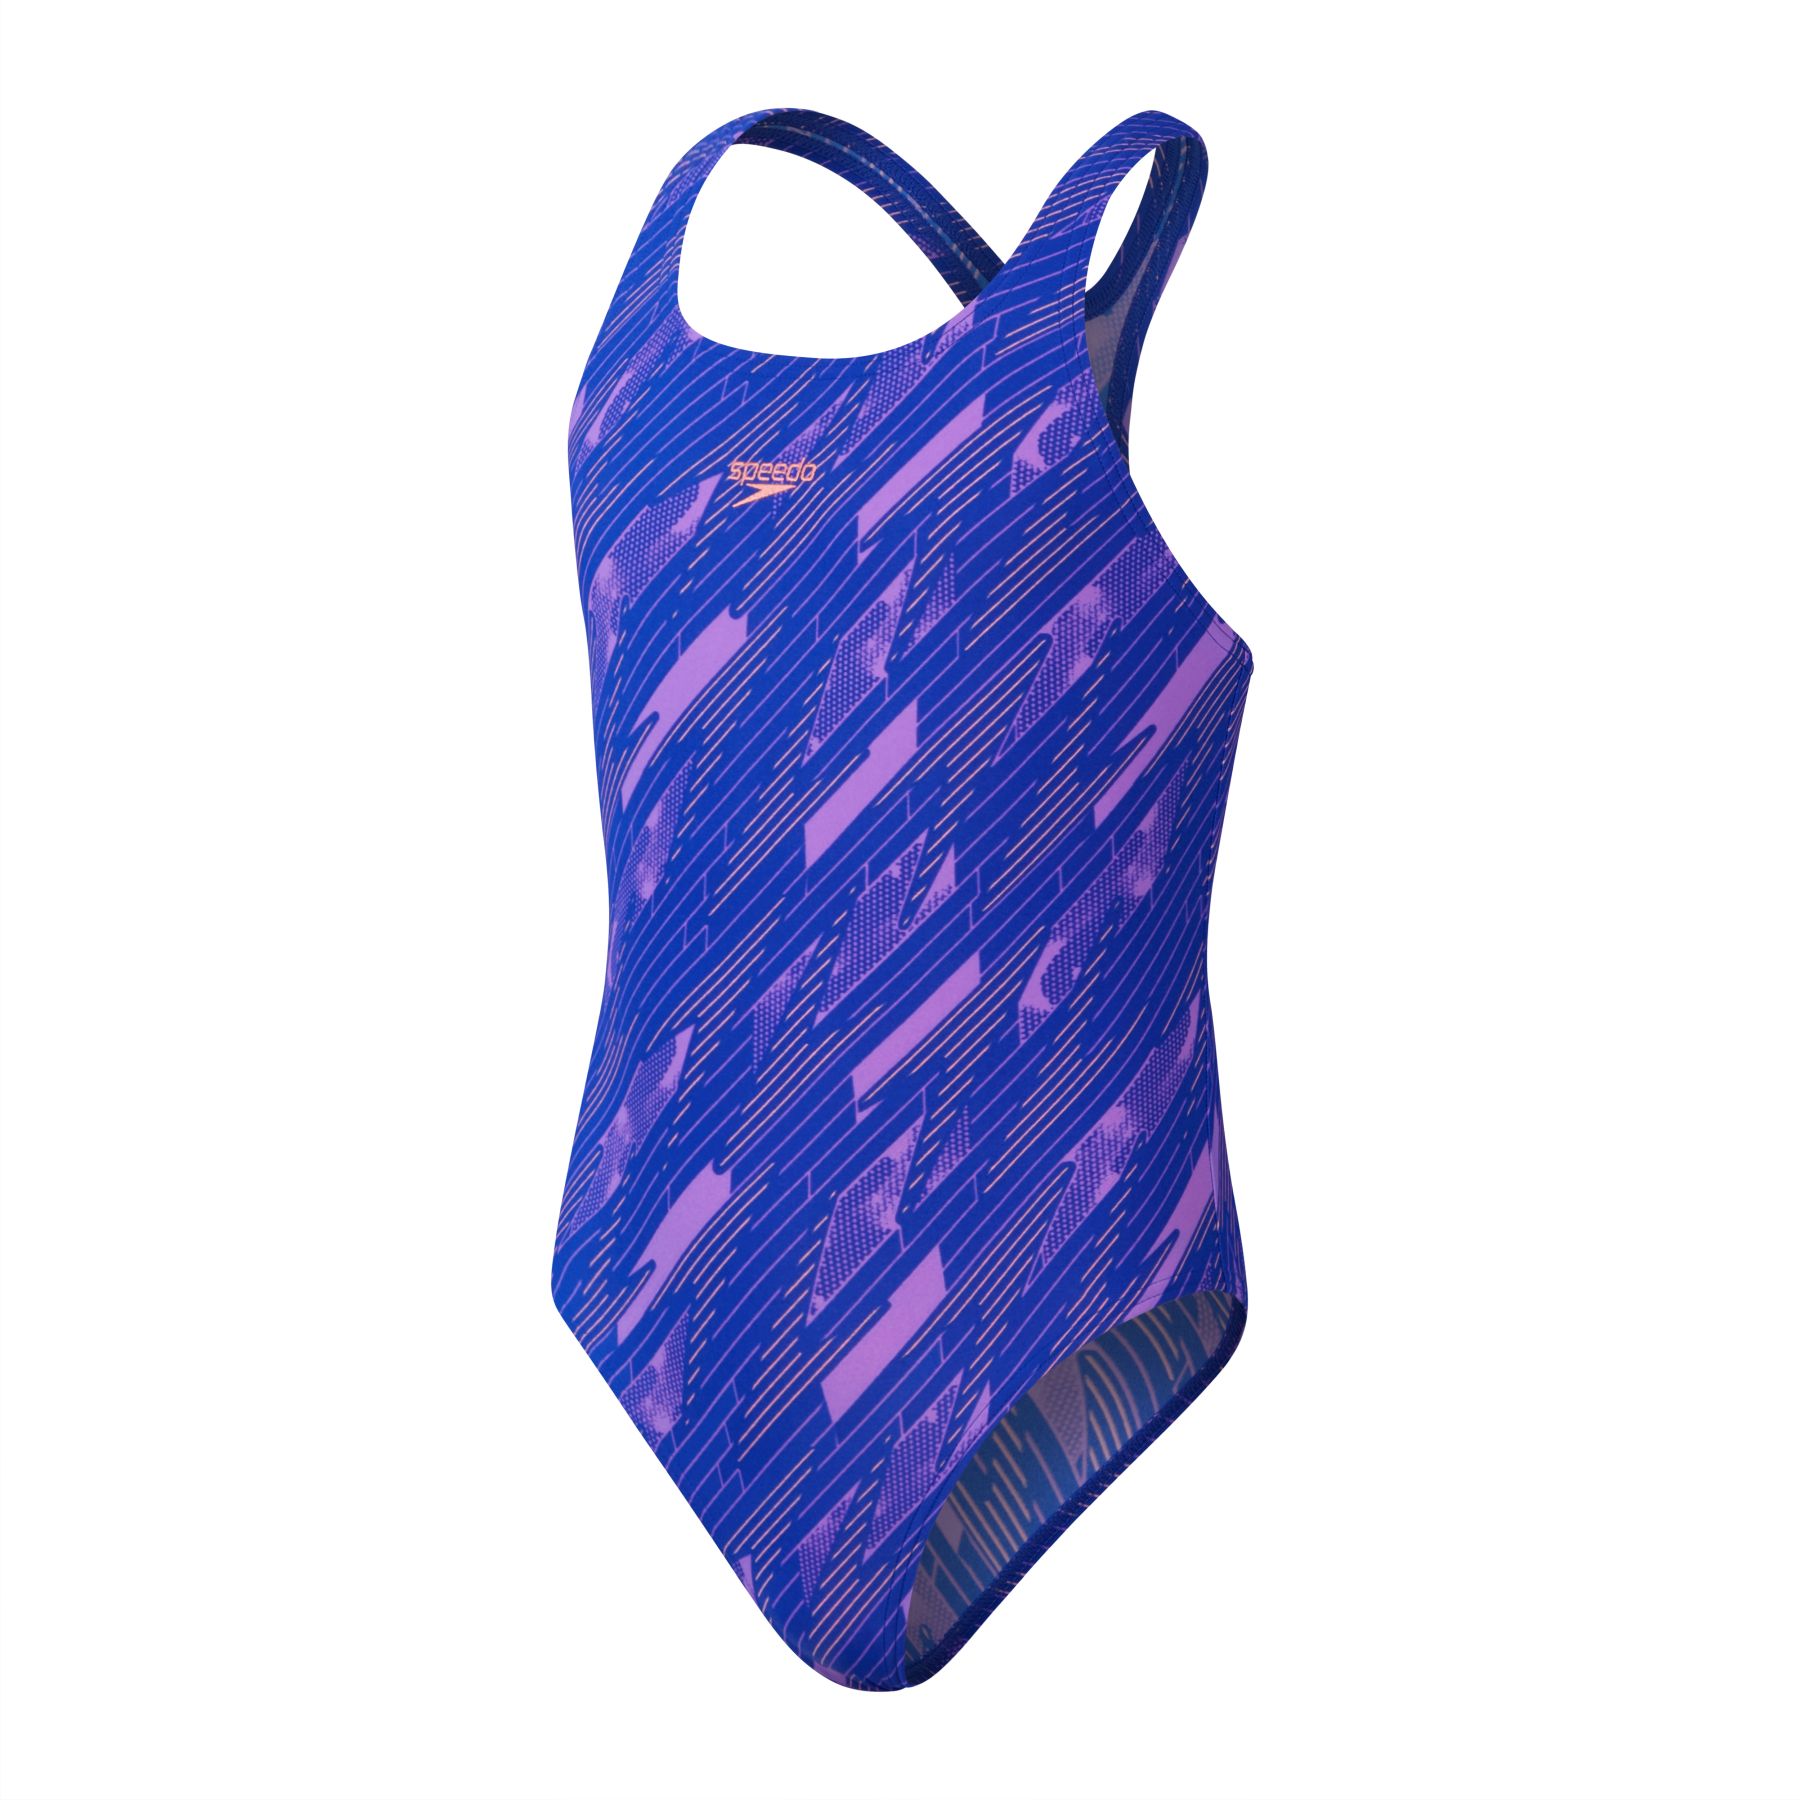 Picture of Speedo Hyper Boom Allover Medalist Swimsuit Girls - true cobalt/sweet purple/disco peach